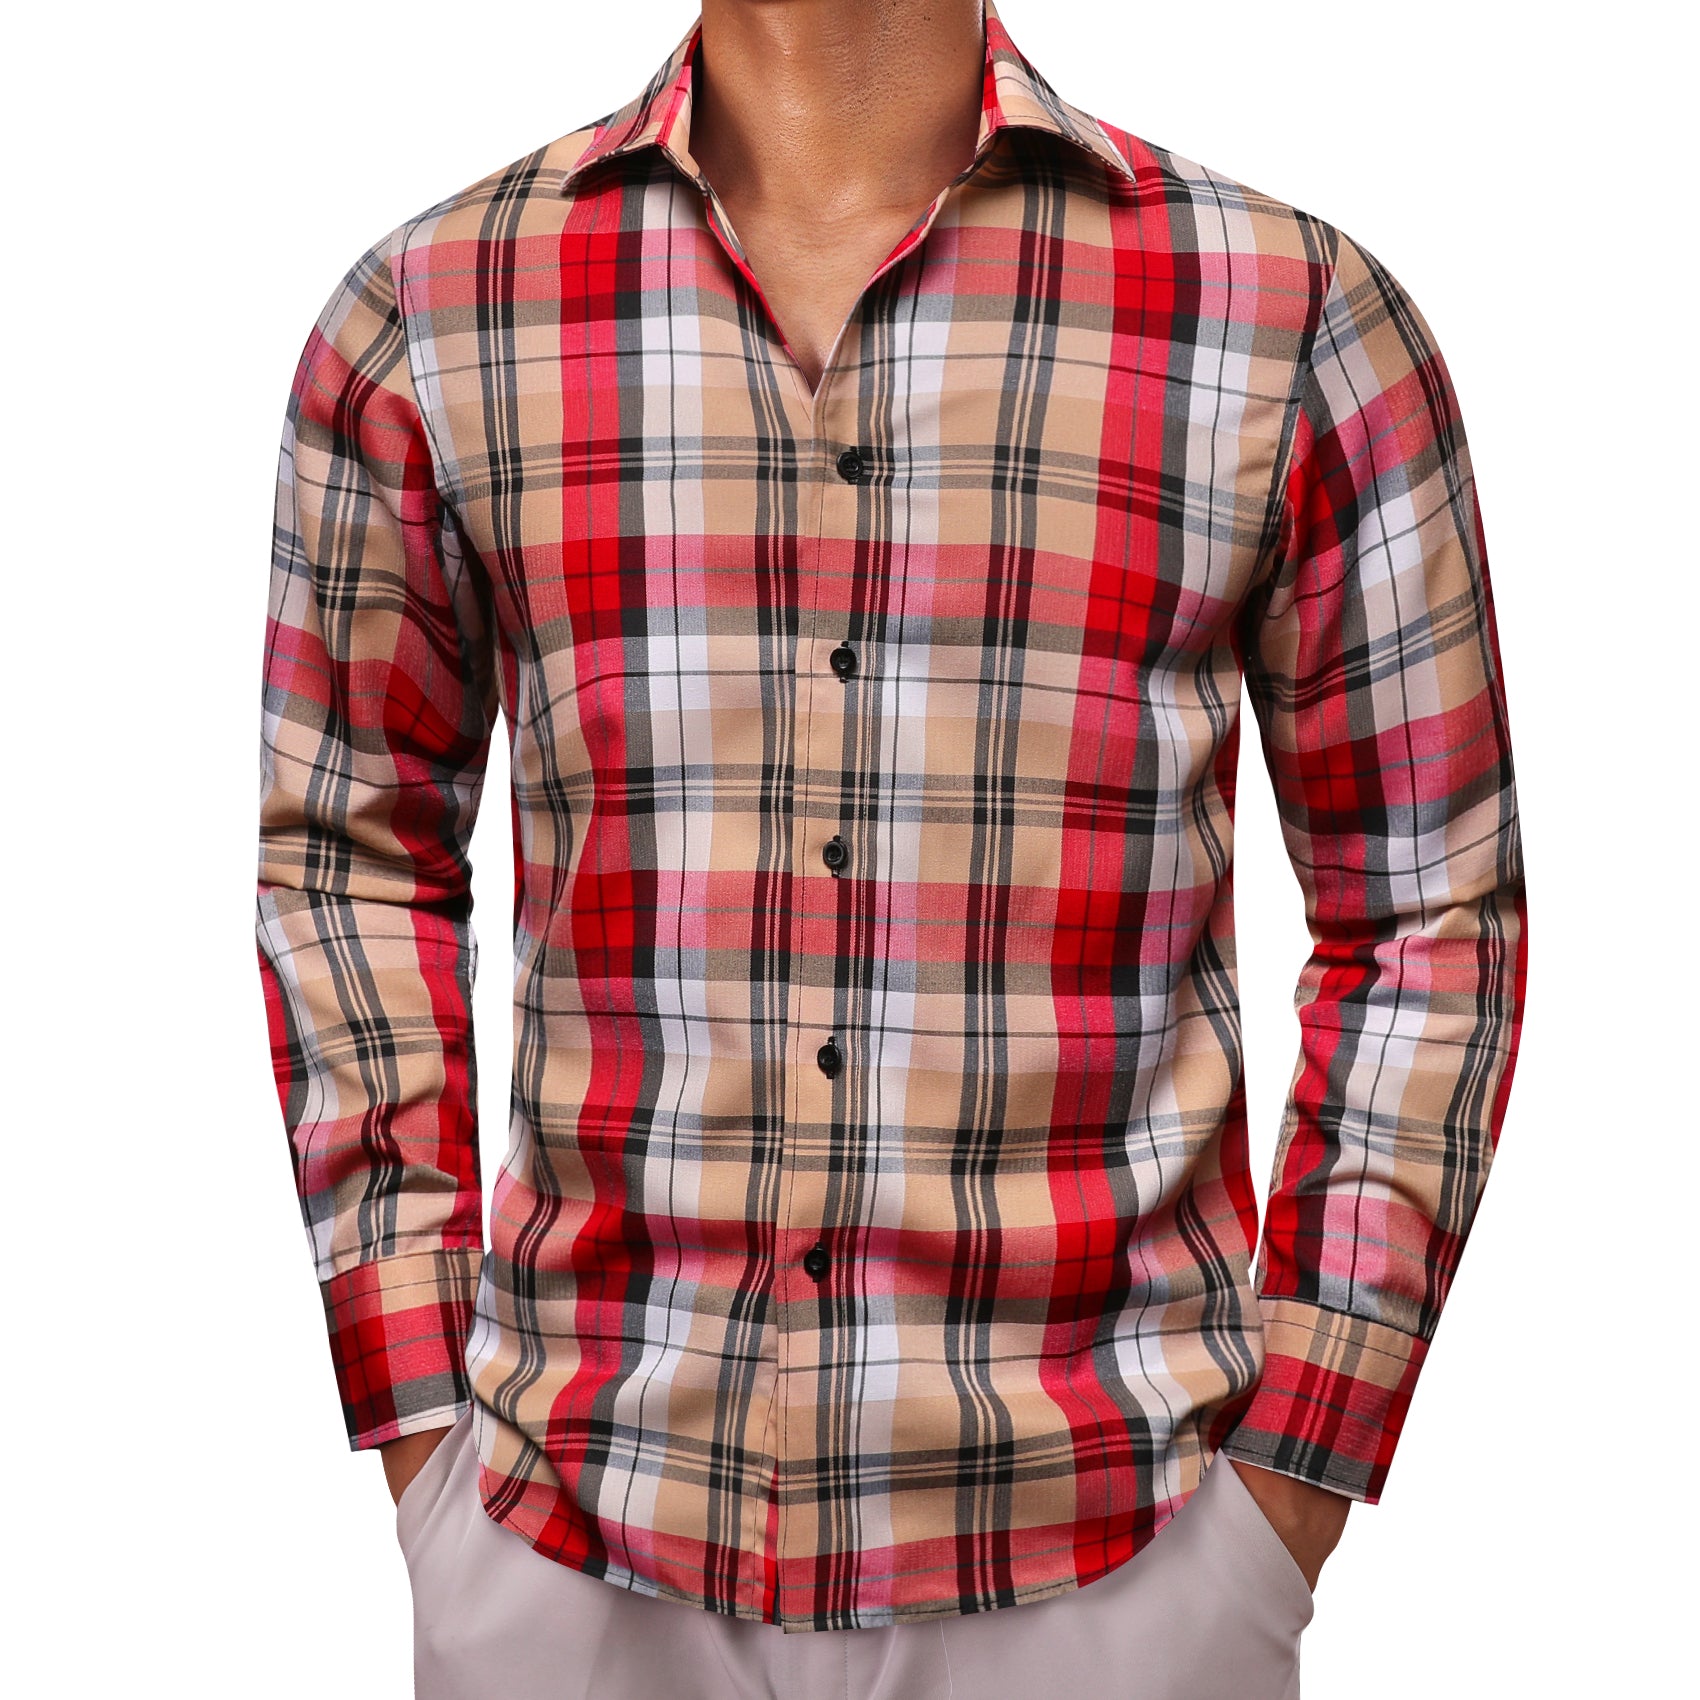  khaki Red Plaid Men's Long Sleeve Shirt